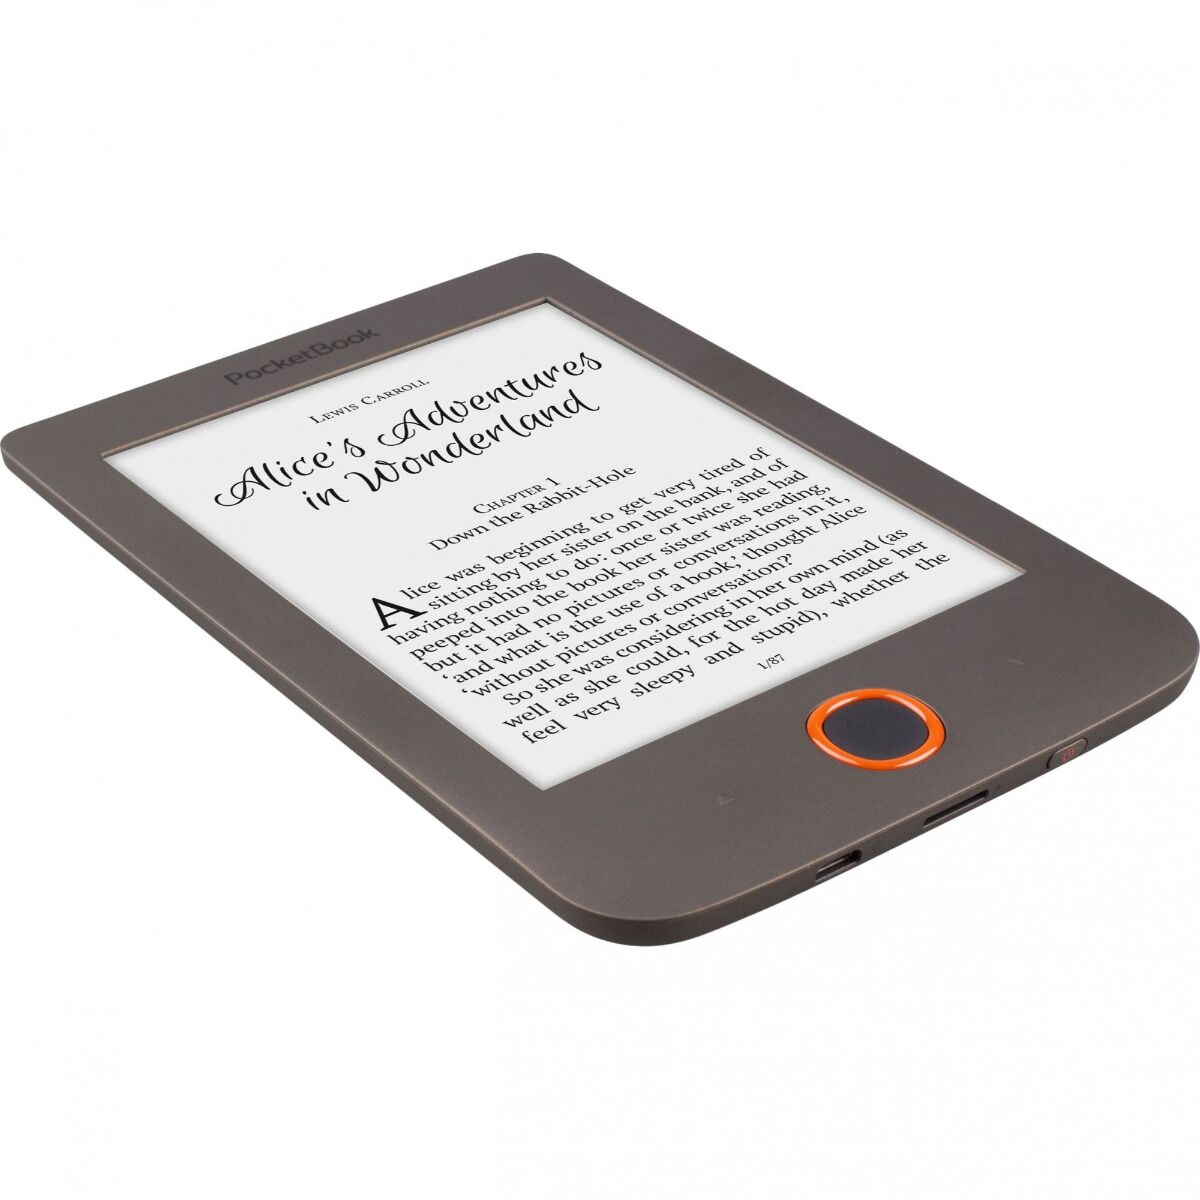 eBook Basic Lux PocketBook, 8 GB, iluminare, wireless, afisaj E Ink Carta HD